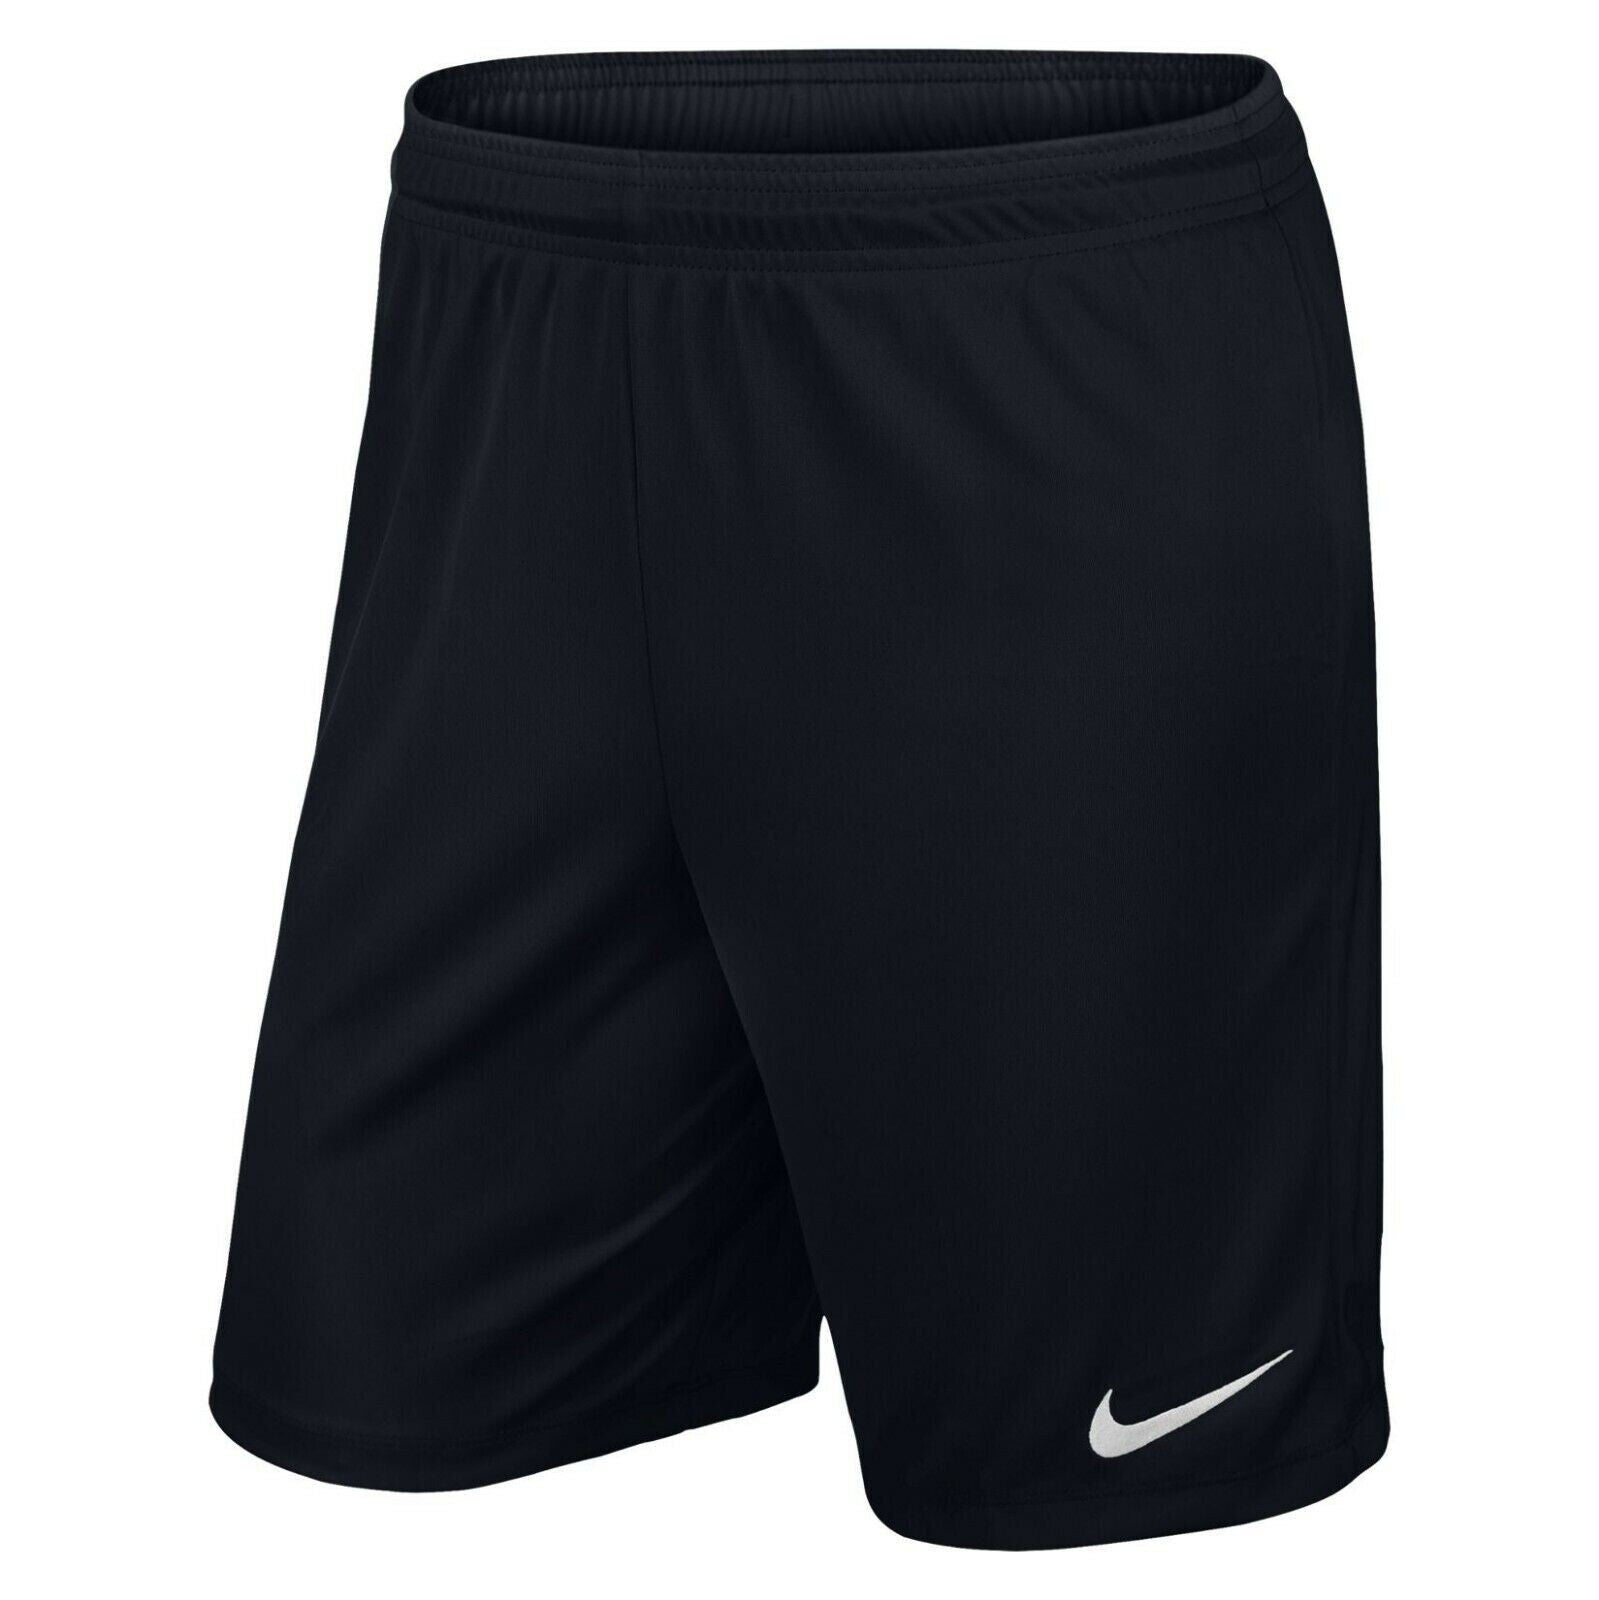 Mens Gym Shorts UK - Men's Nike Shorts Park Sports Football Running Training Dri Fit Gym Shorts